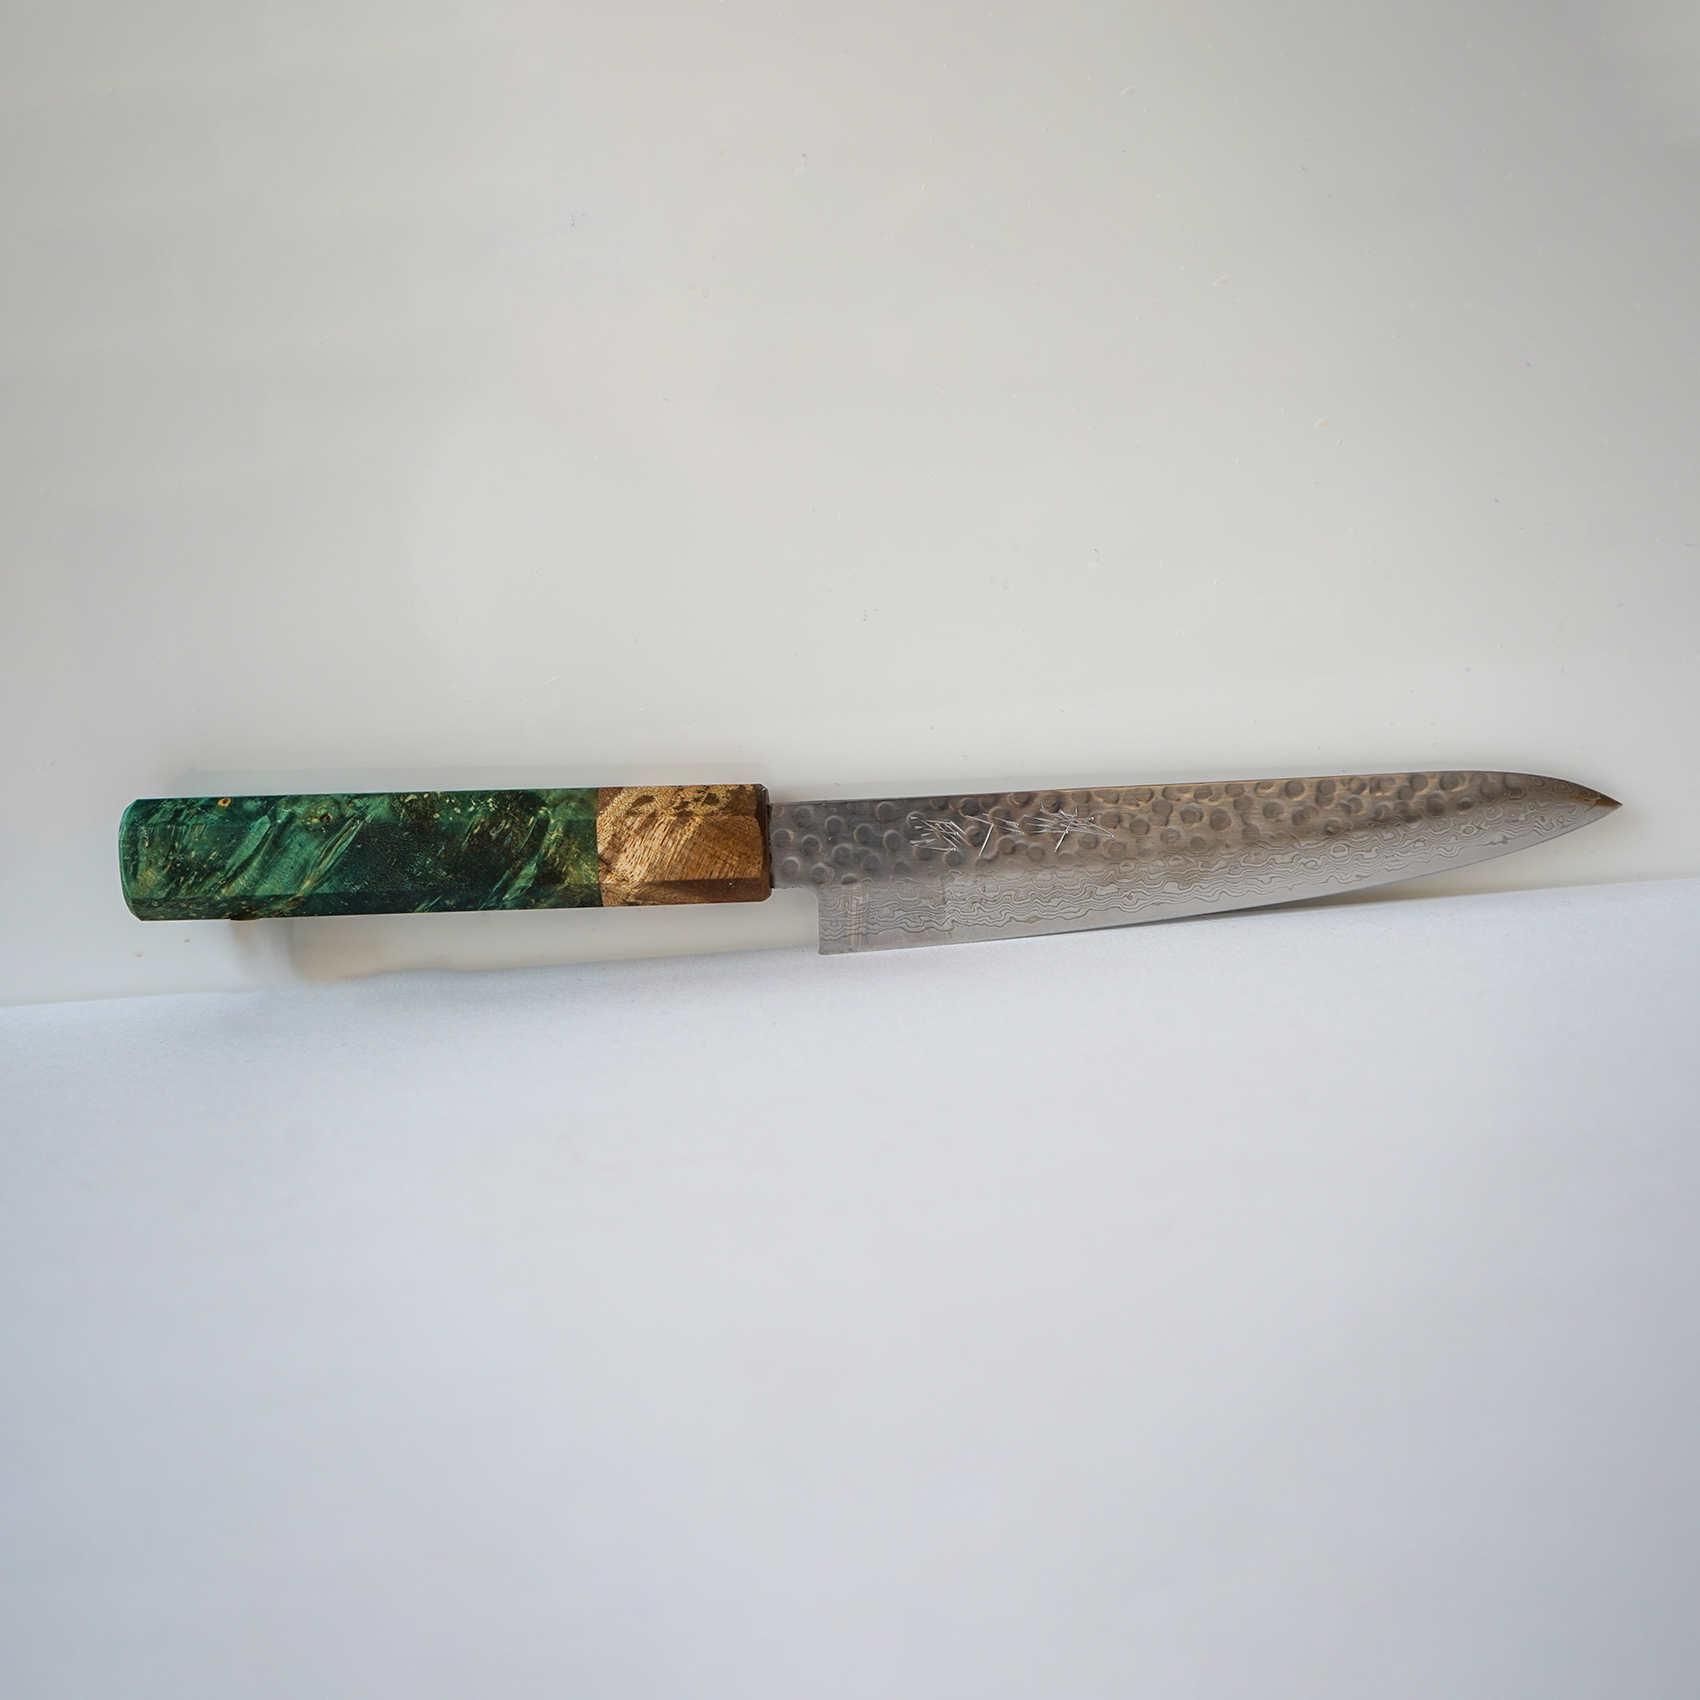 Sakai Kyuba – Paring Knife – The Petty with Olive Green handle on white background